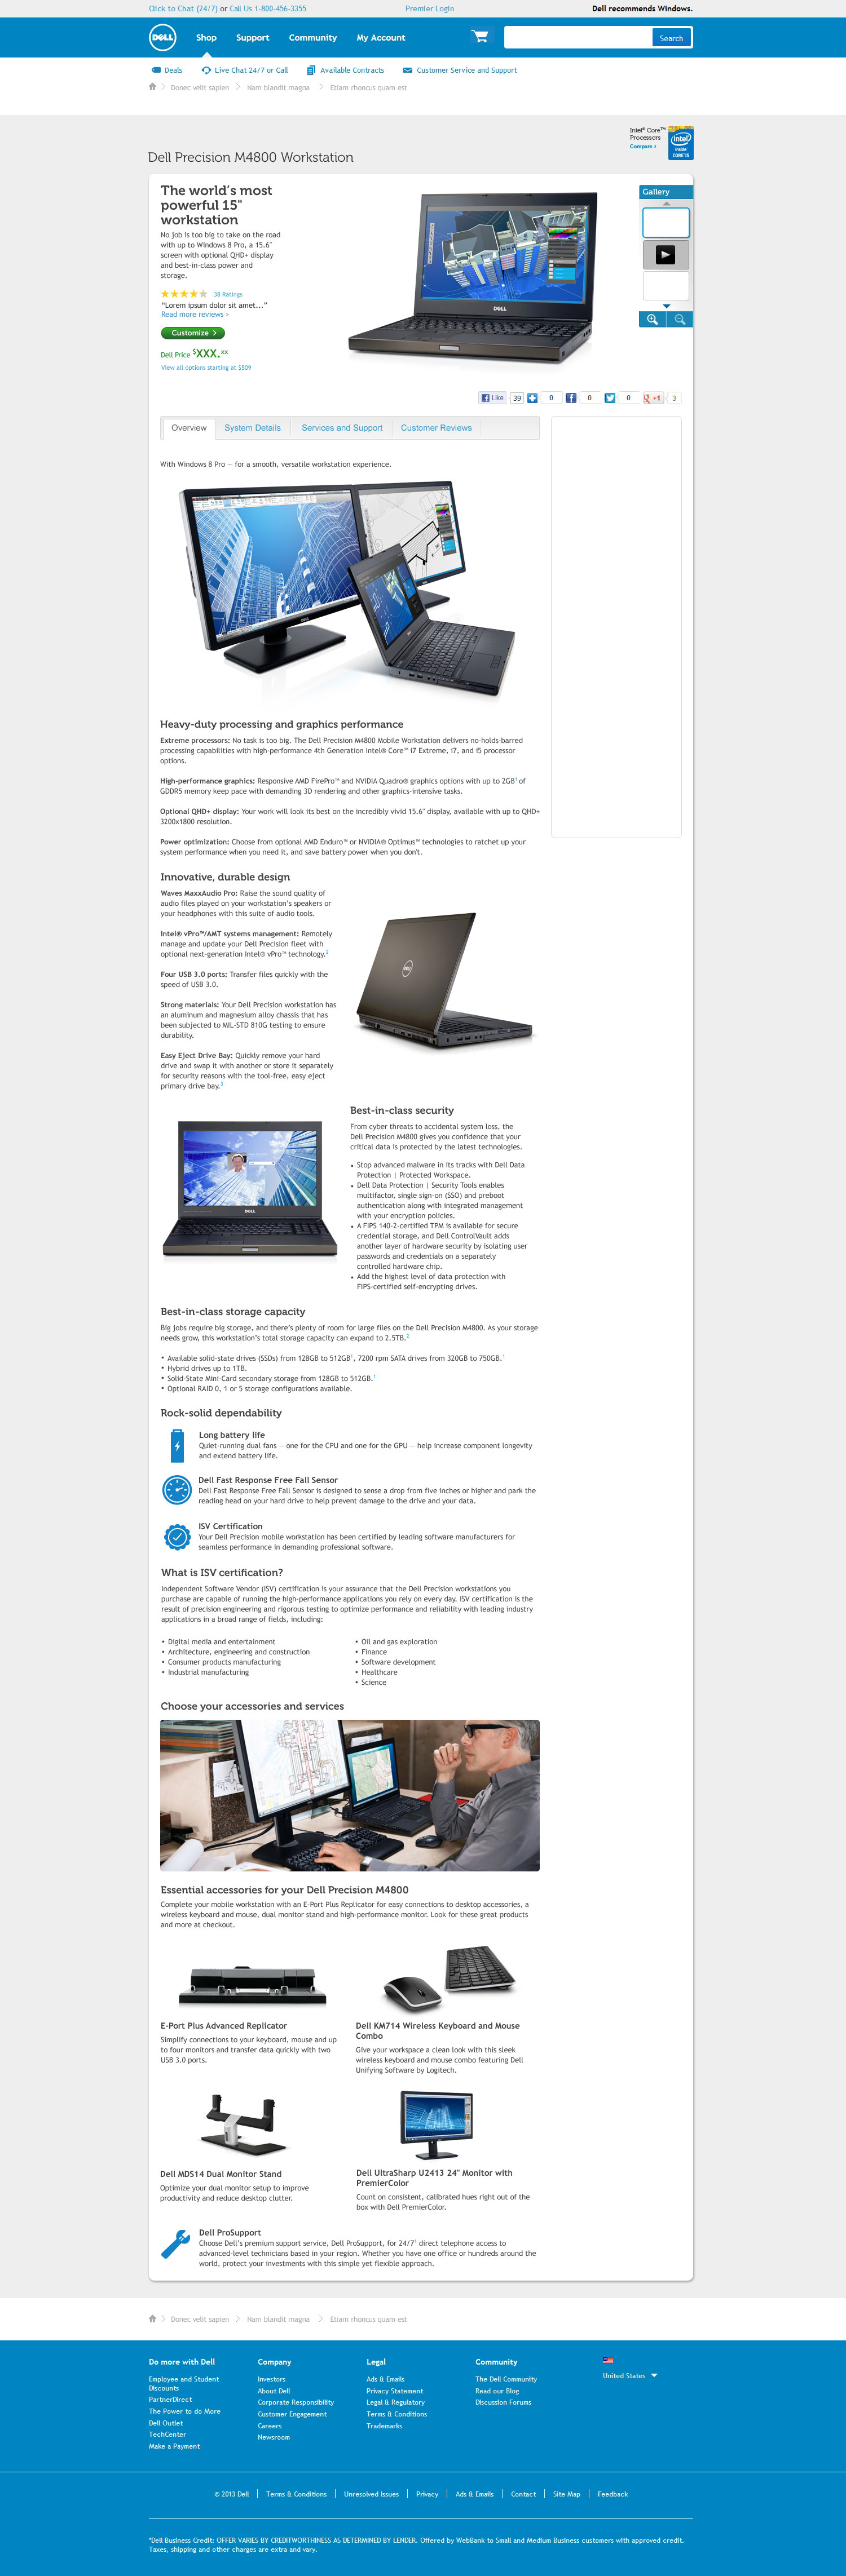 Dell Precision M4800 workstation details page